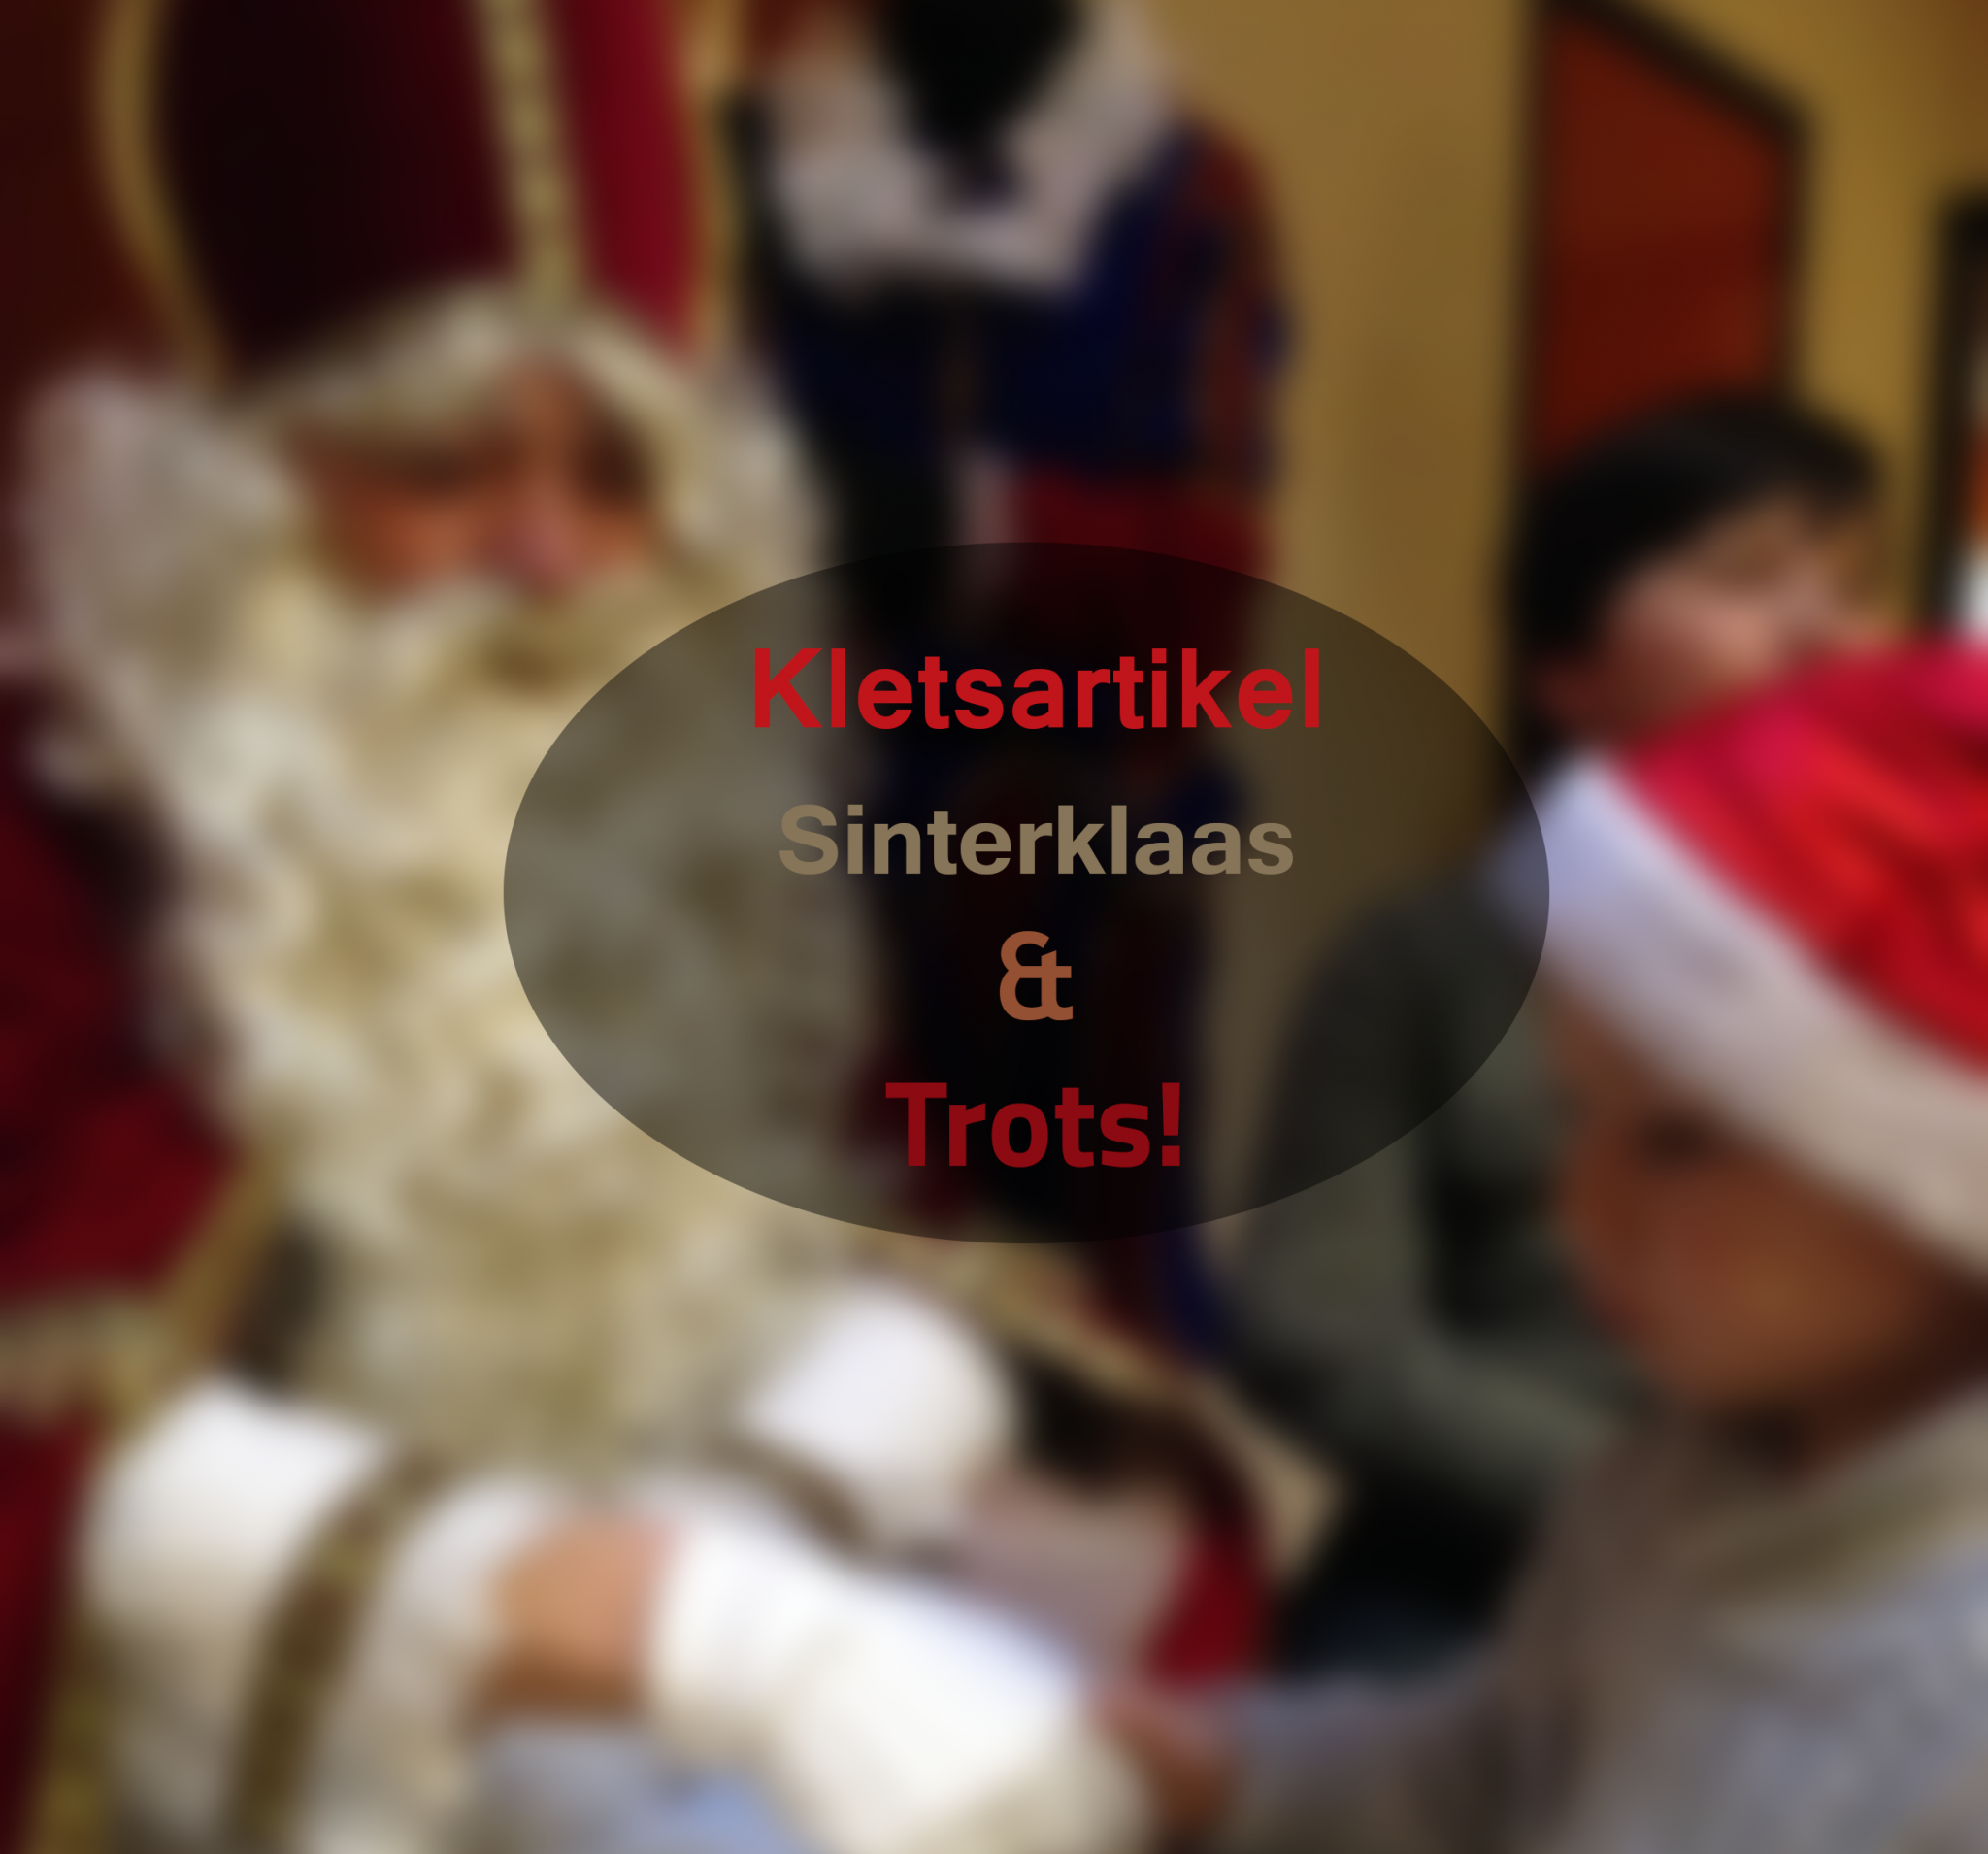 Kletsartikel: Sinterklaas en trots!